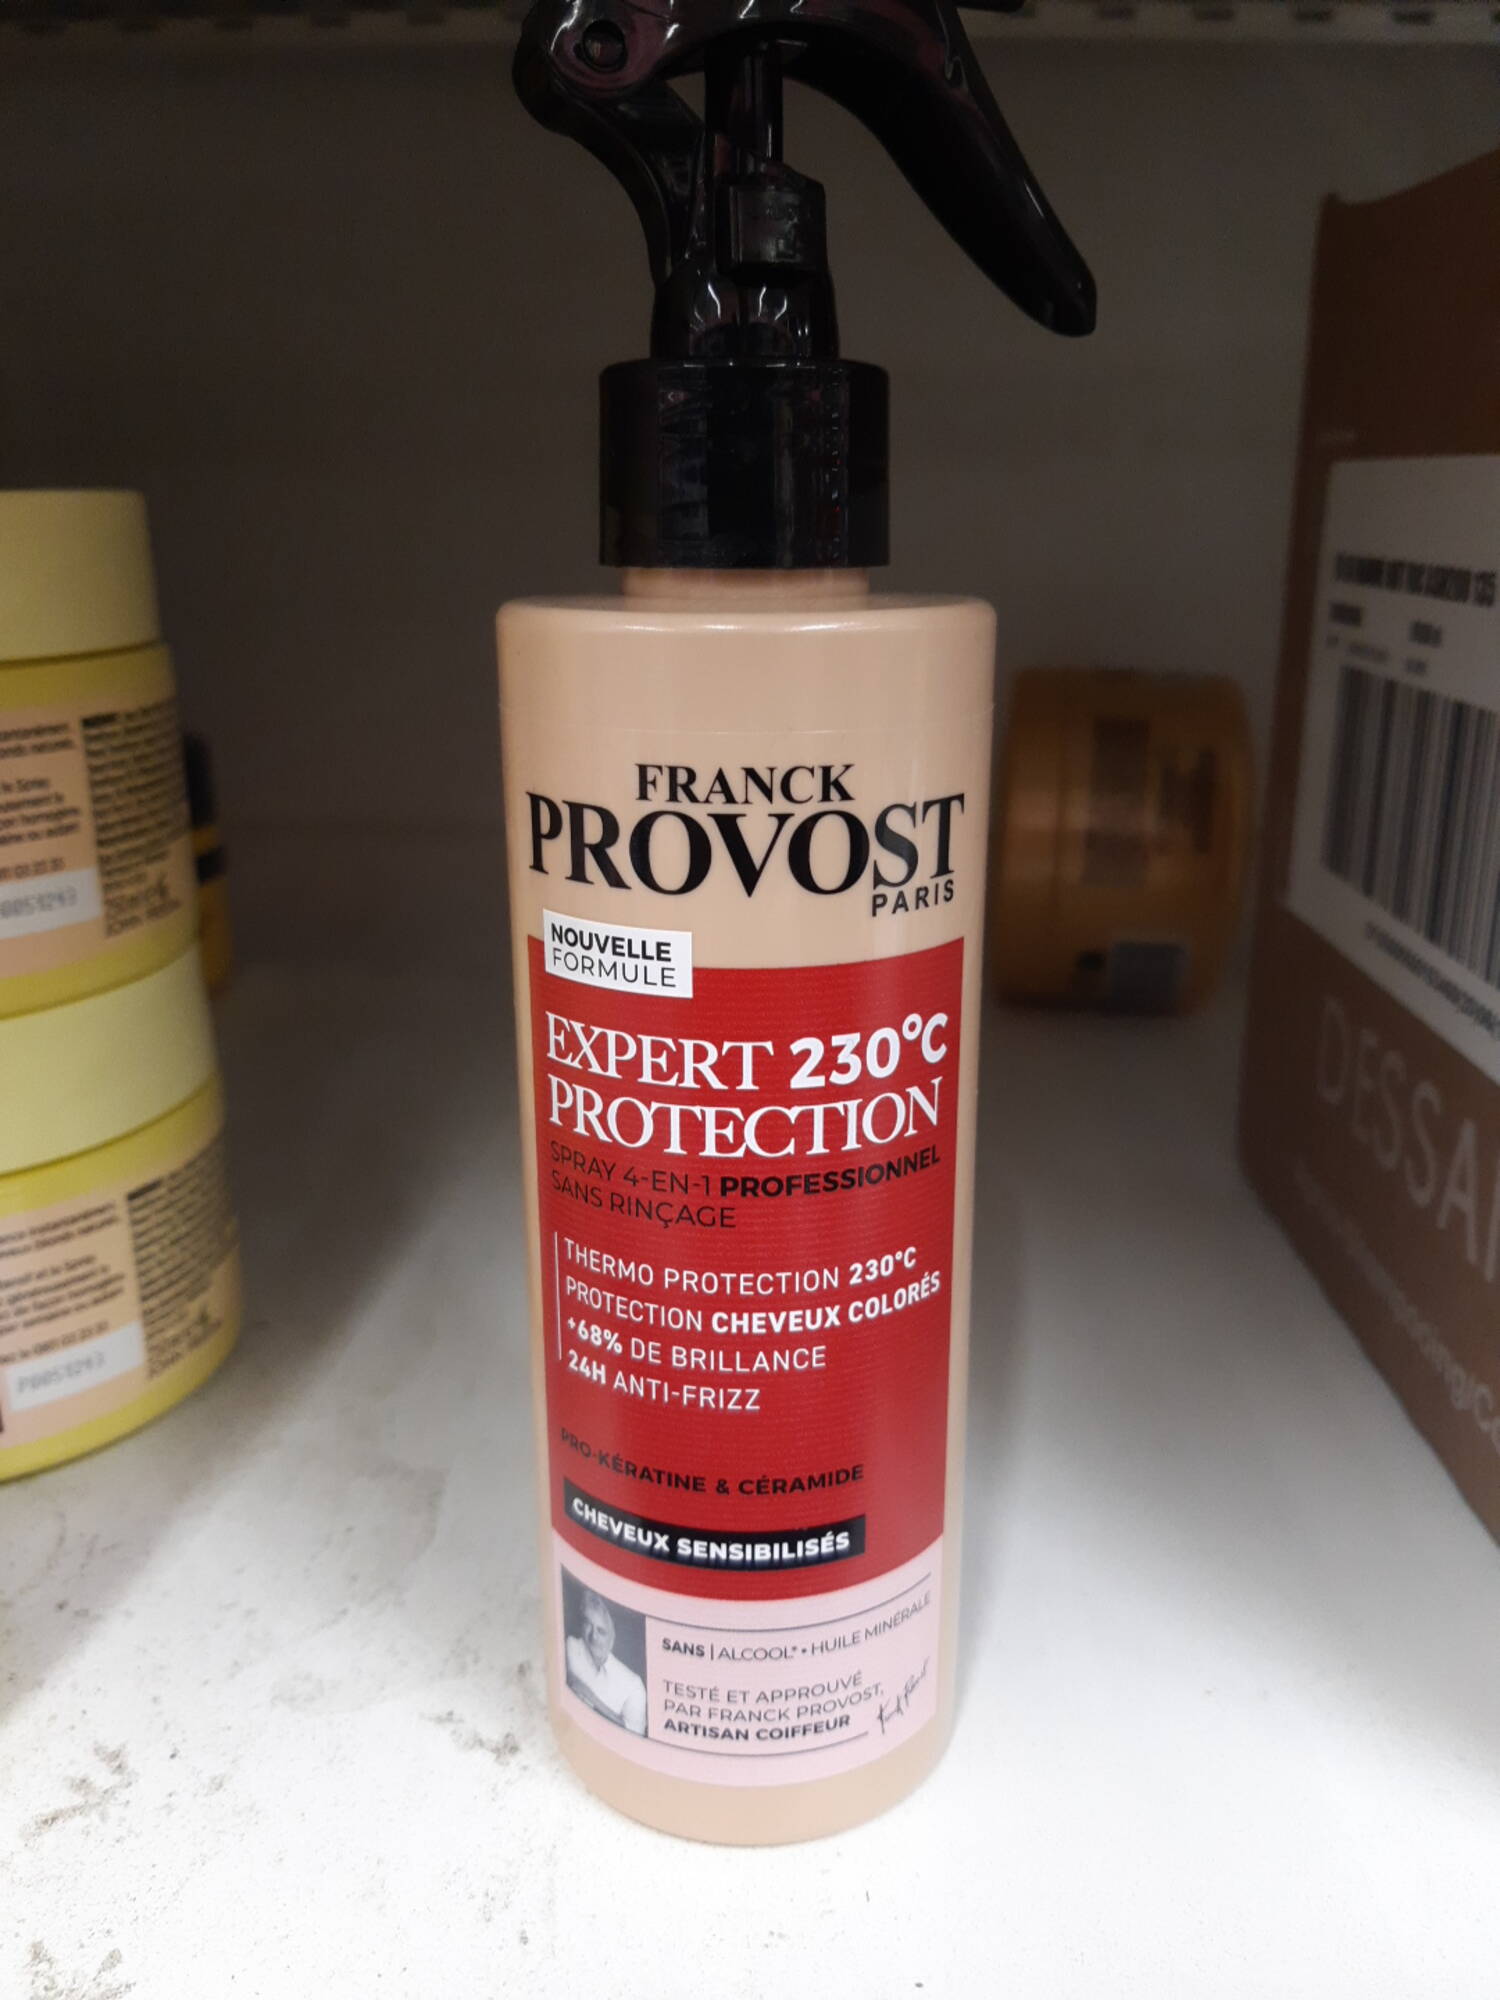 FRANCK PROVOST - Expert 230°C protection - Spray 4-en-1 professionnel